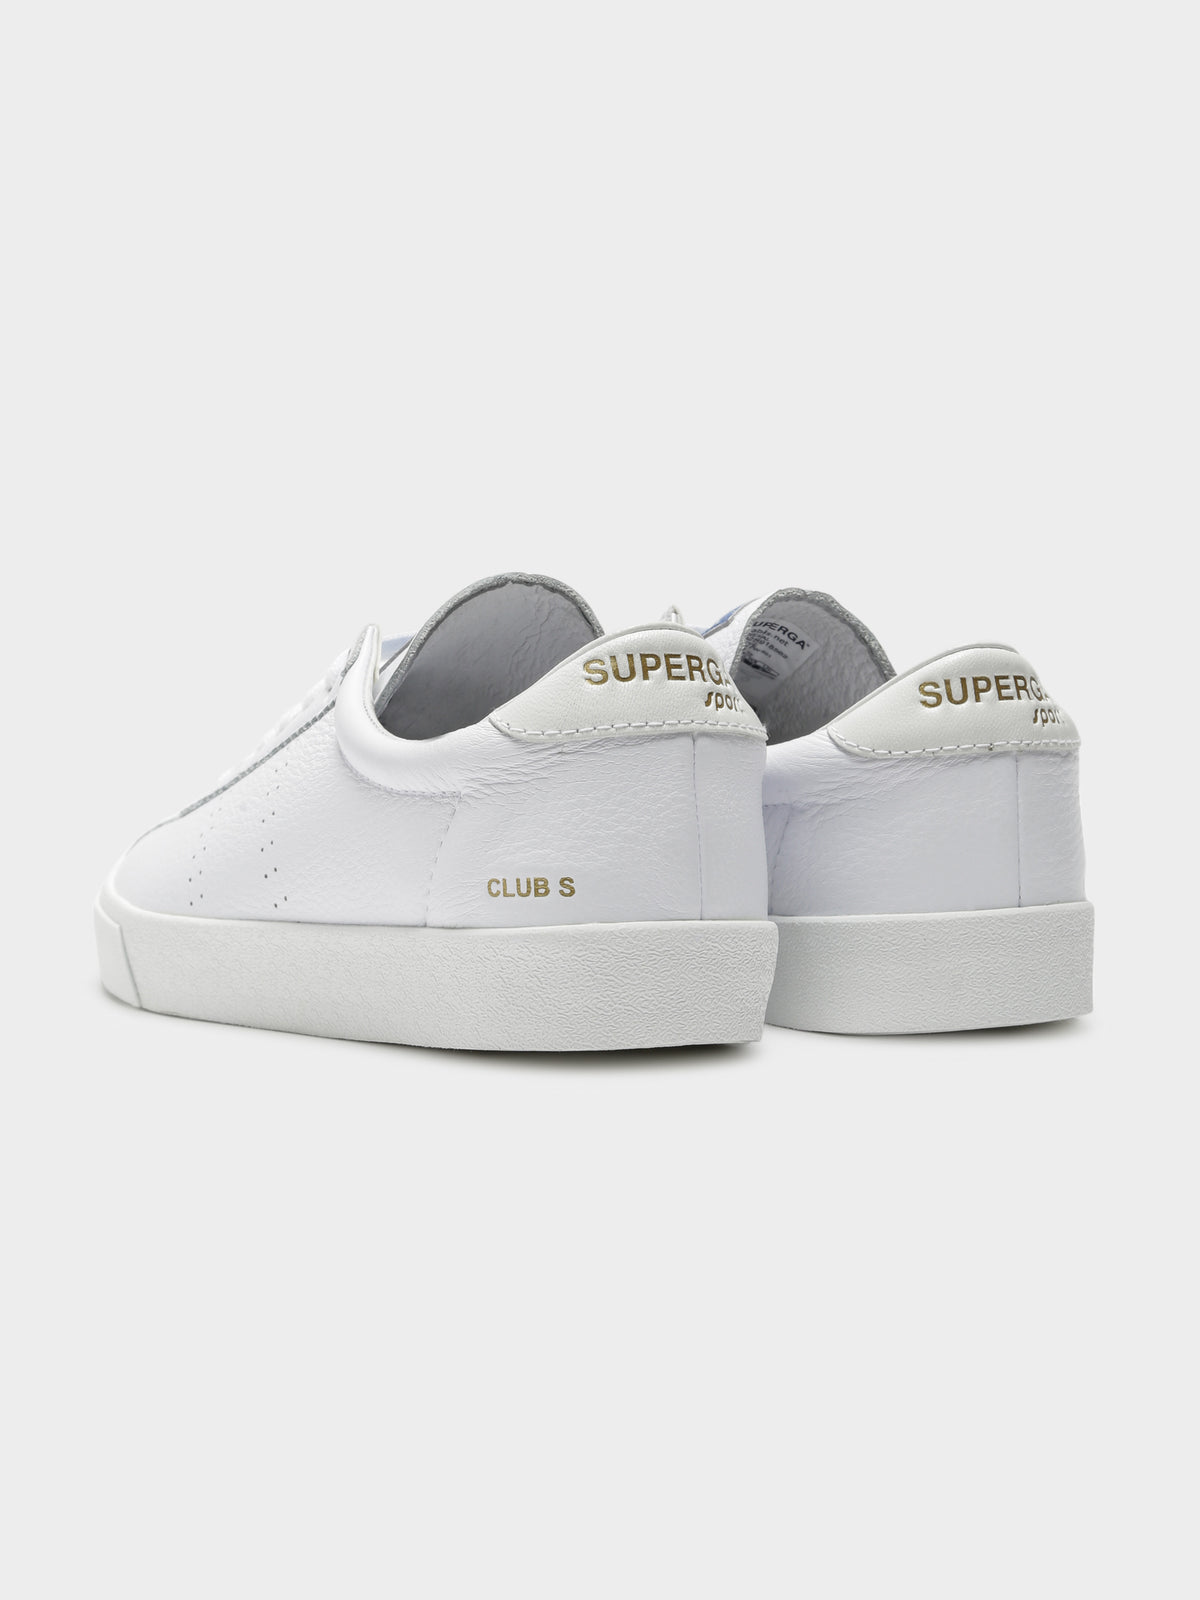 Unisex 2869 Club Comfleau Australia Sneaker in White